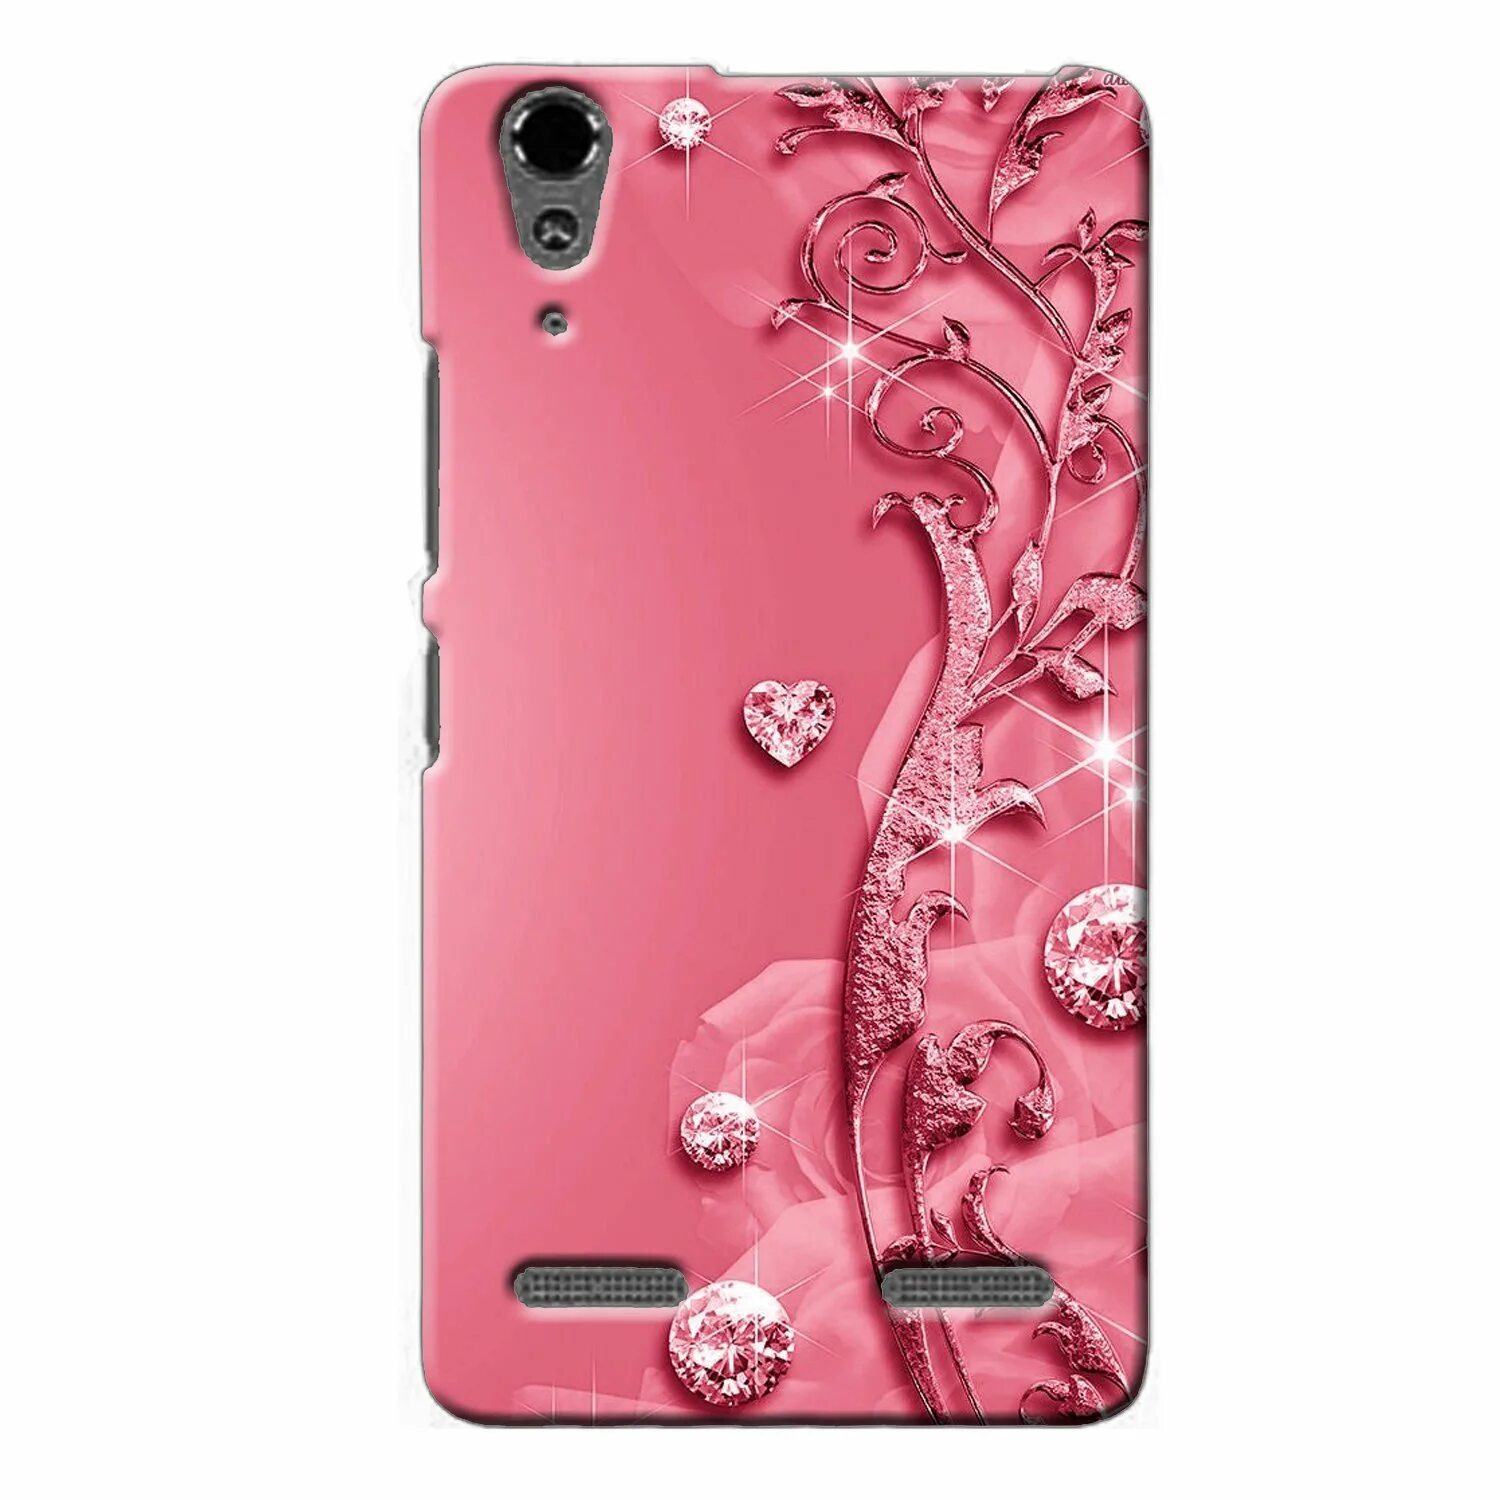 Iphone 11 Crossbody Case. Cb6000 Pink. Back telefon and Cover. Buck Kace. Back mobile